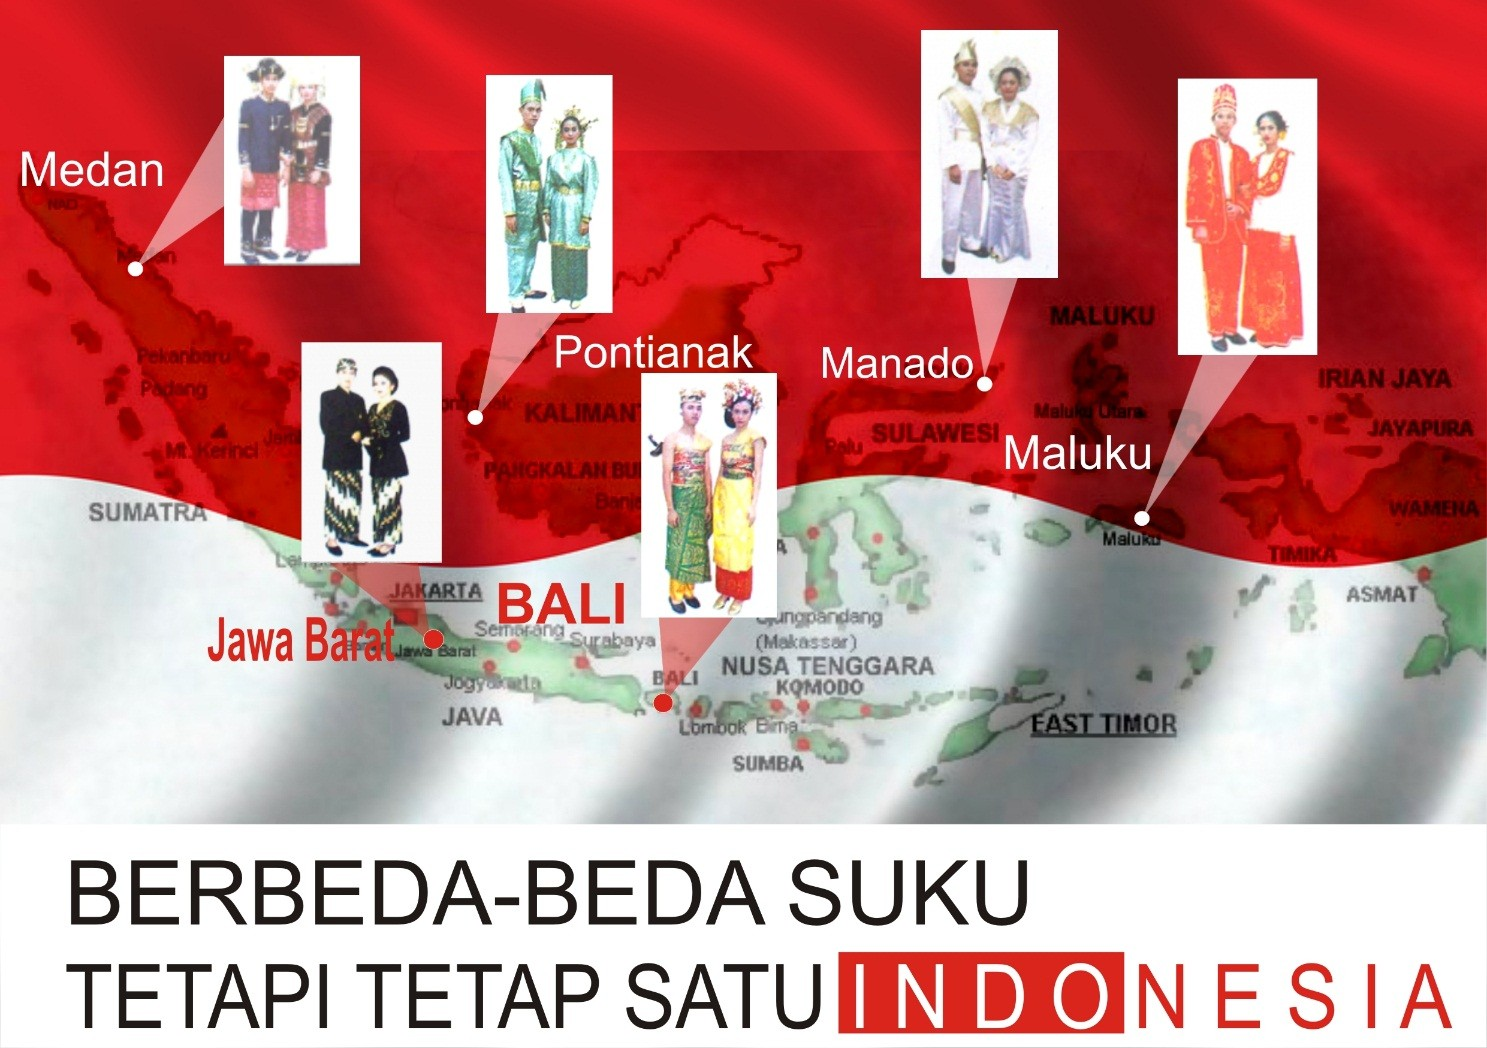 Arti dan Makna Sila Ketiga Persatuan Indonesia Pokok pokok pikiran yang perlu dipahami antara lain : Nasionalisme Cinta